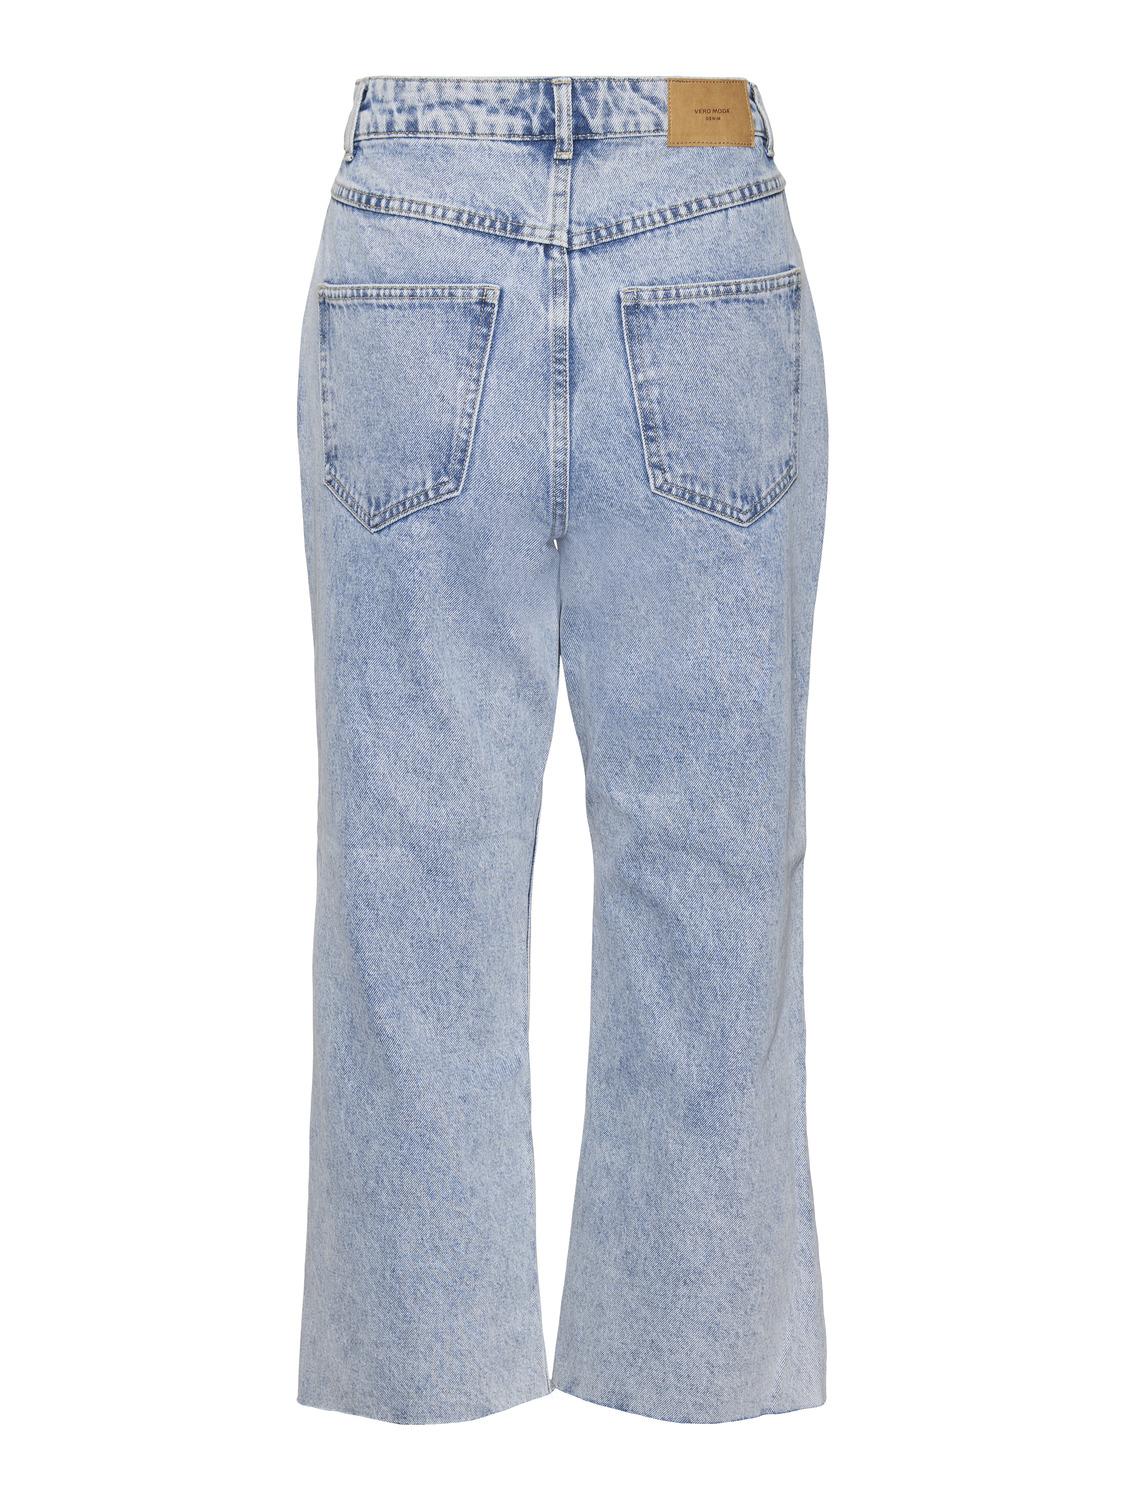 Kithy Jeans, Light Blue Denim, W29/L34